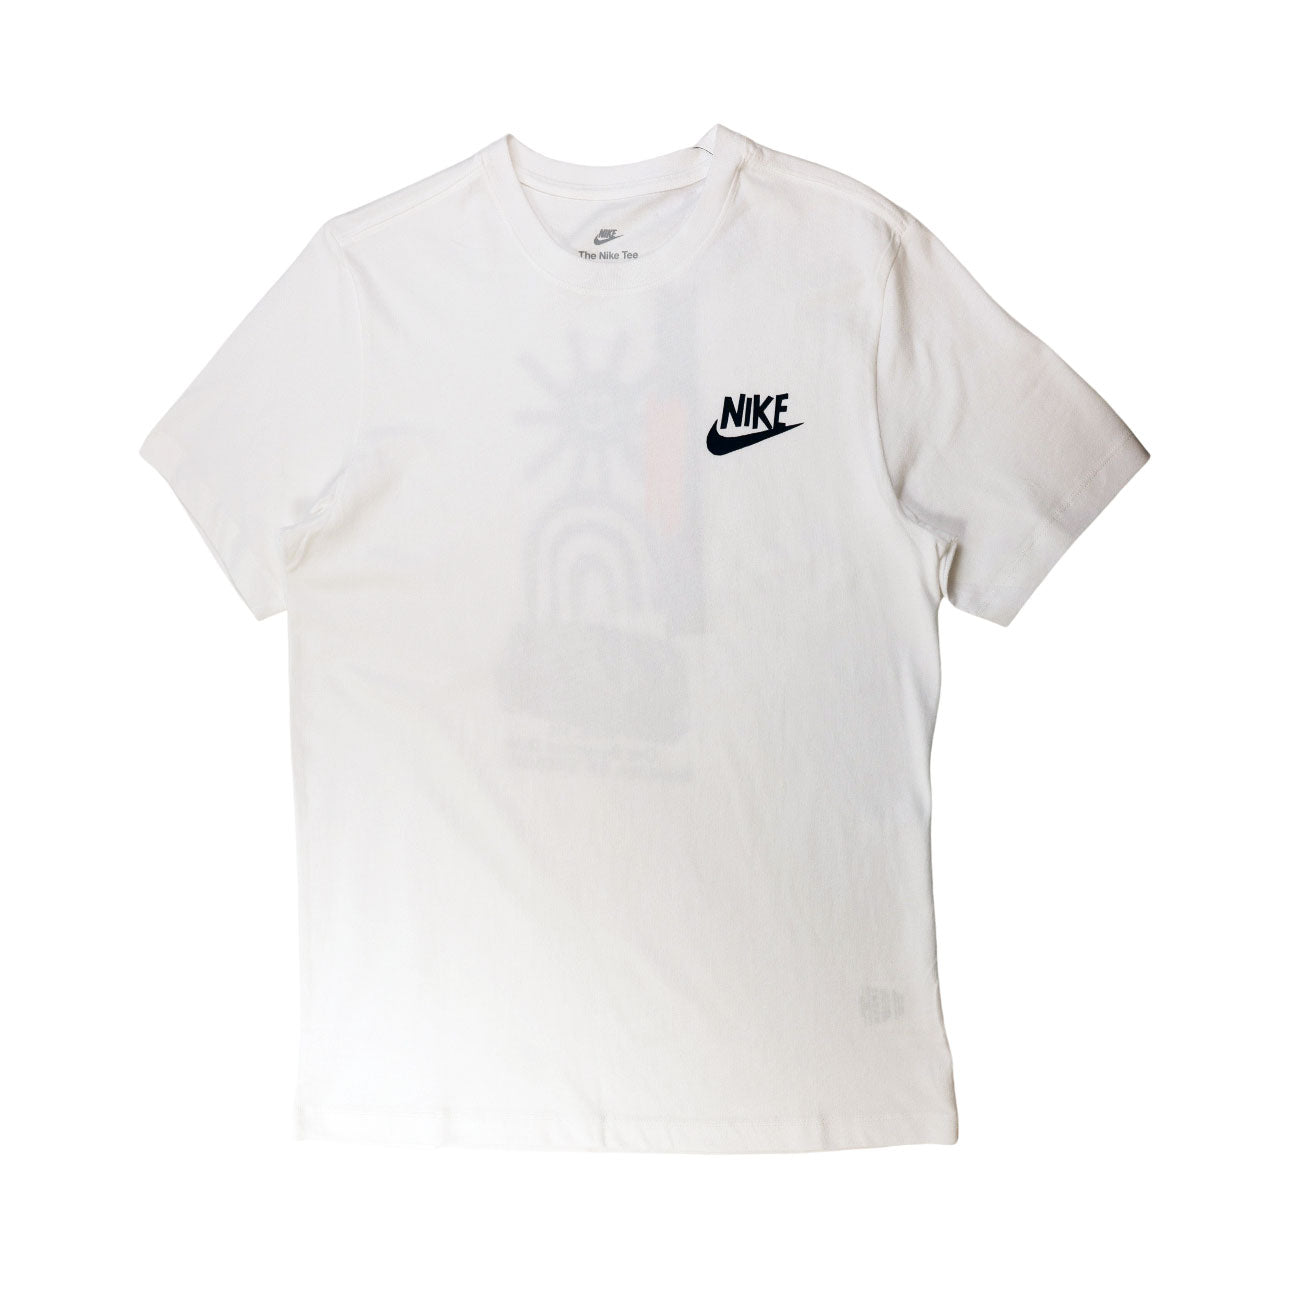 Nike Sportswear Tee (White)